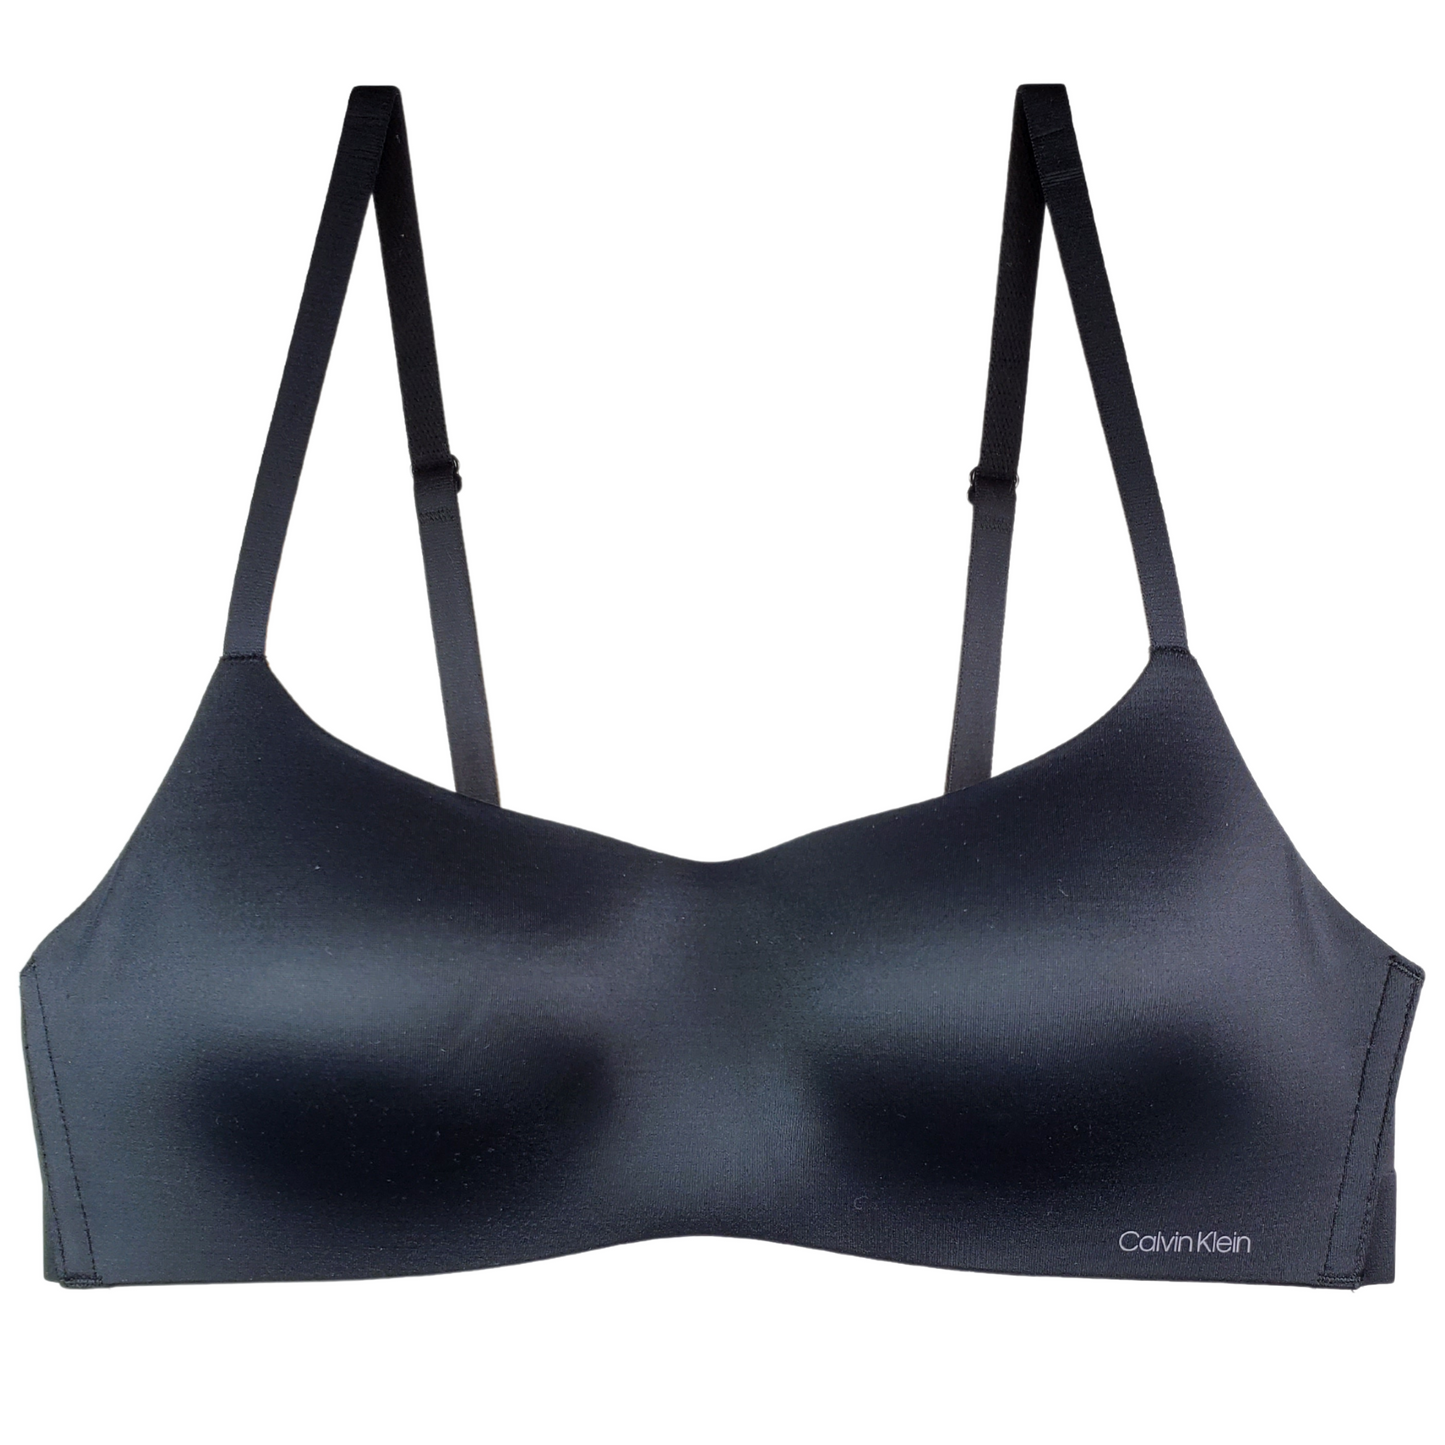 Calvin Klein Black Bra with Lace Back Bra in Size 34C - $27 New